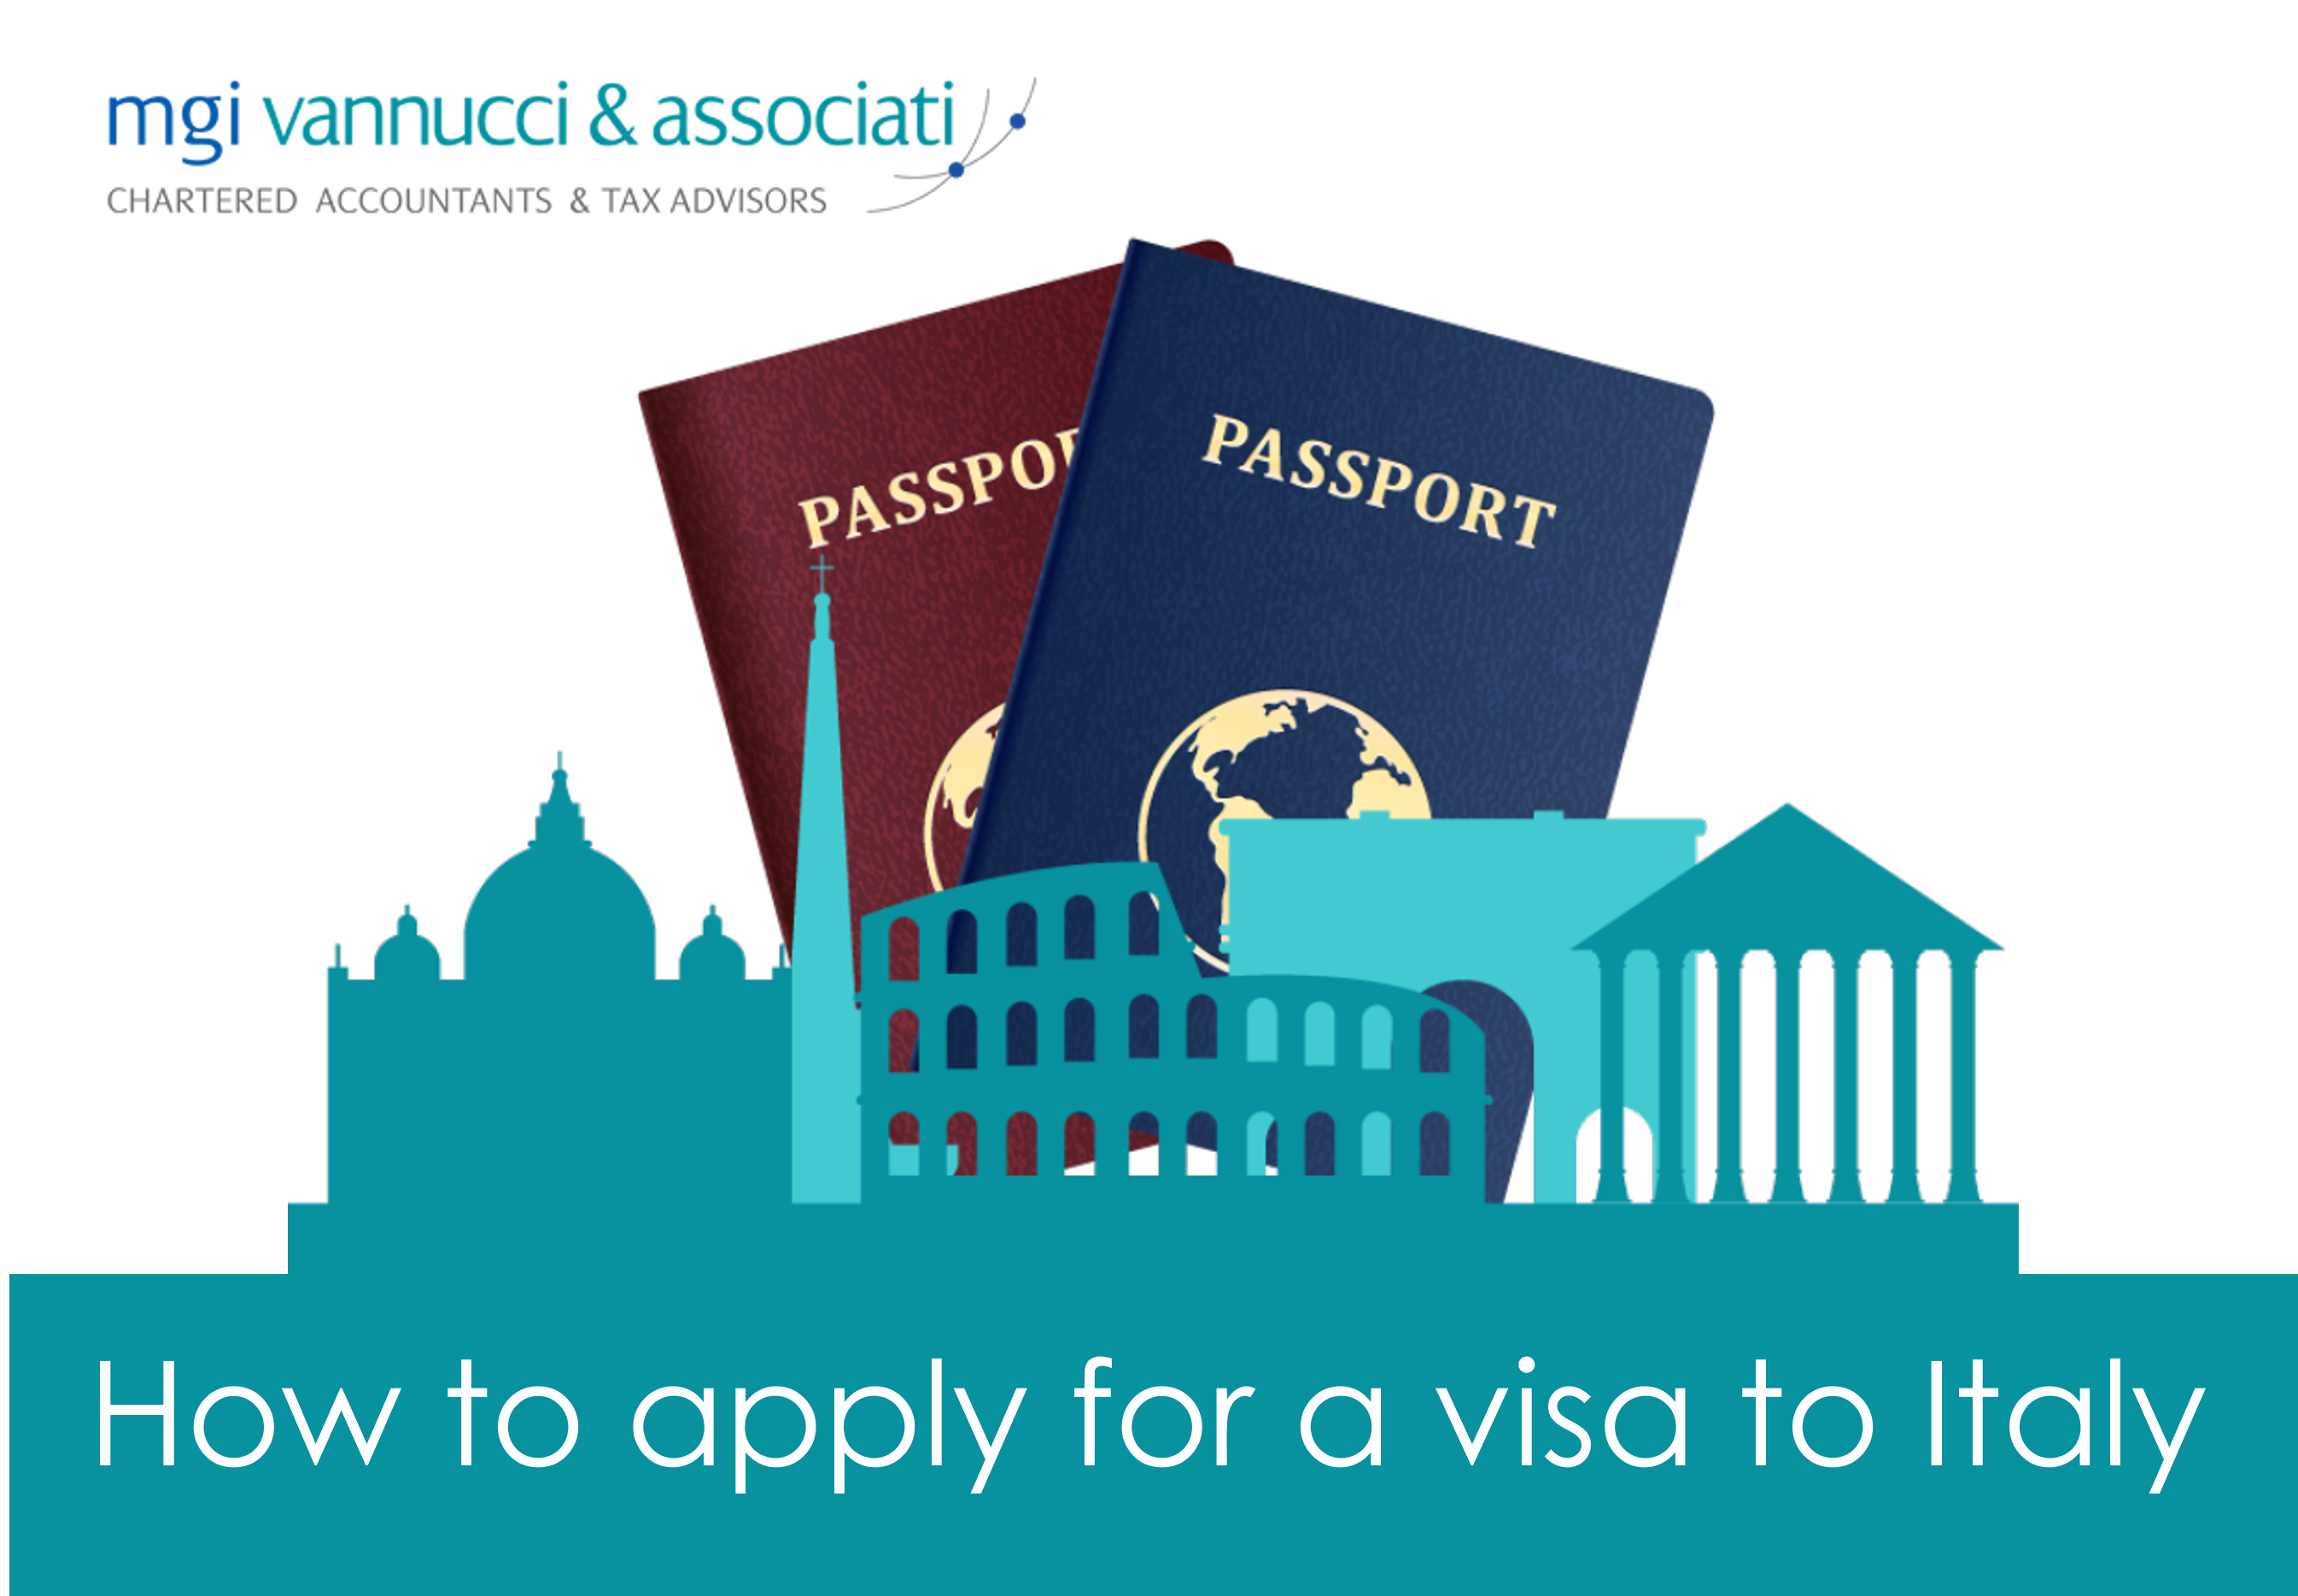 MGI Vannucci & Associati – Bechini, Benigni & Quilici Dottori Commercialisti Associati launch free eBook guide on how to apply for an Italian visa